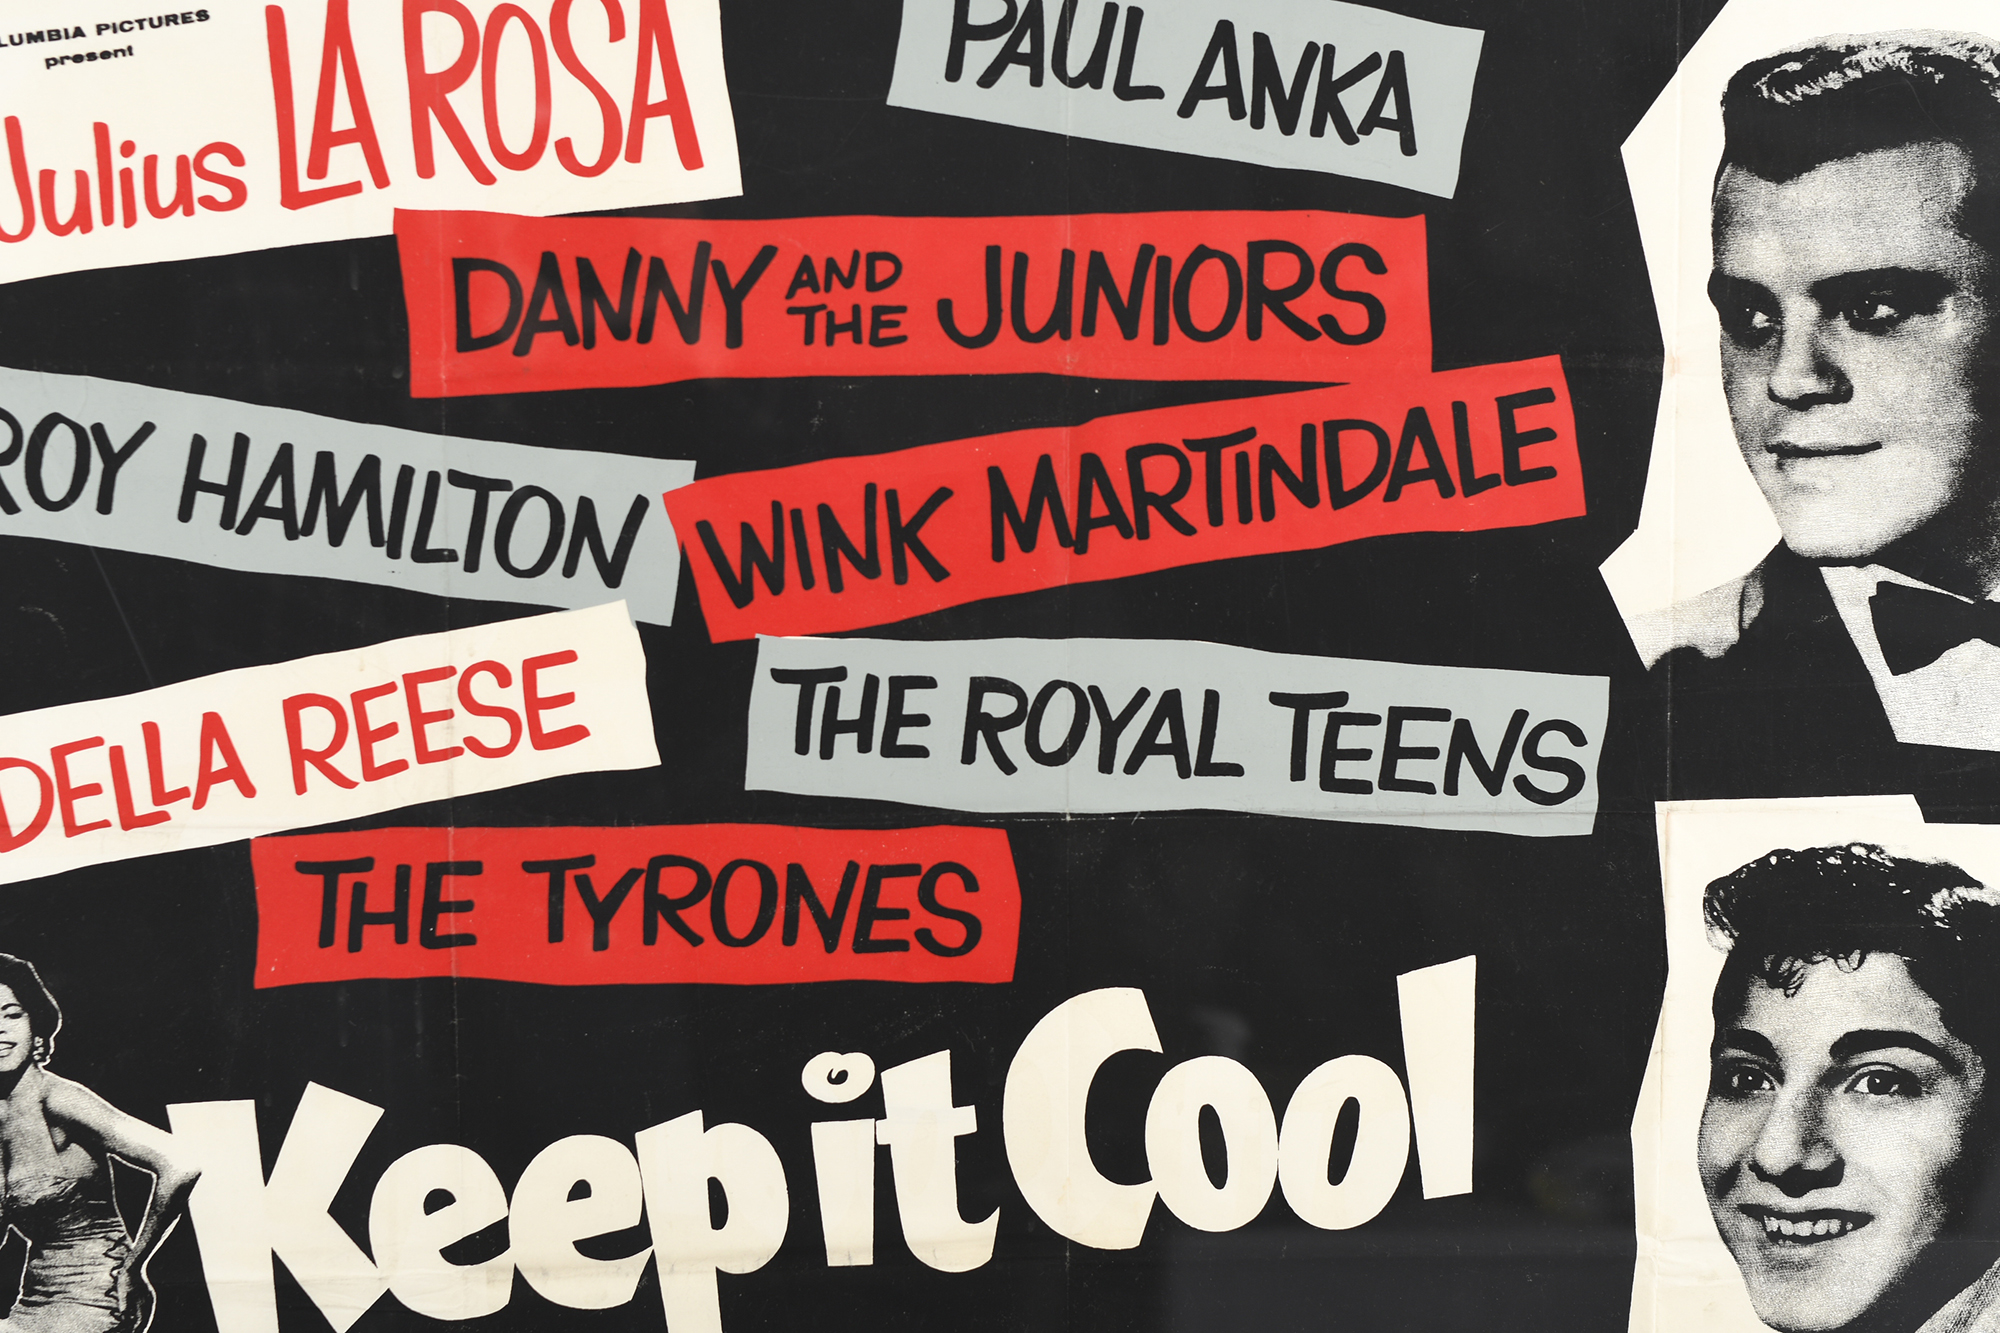 Original UK "Keep it Cool" AKA "Let's Rock" Film Poster - Image 2 of 10